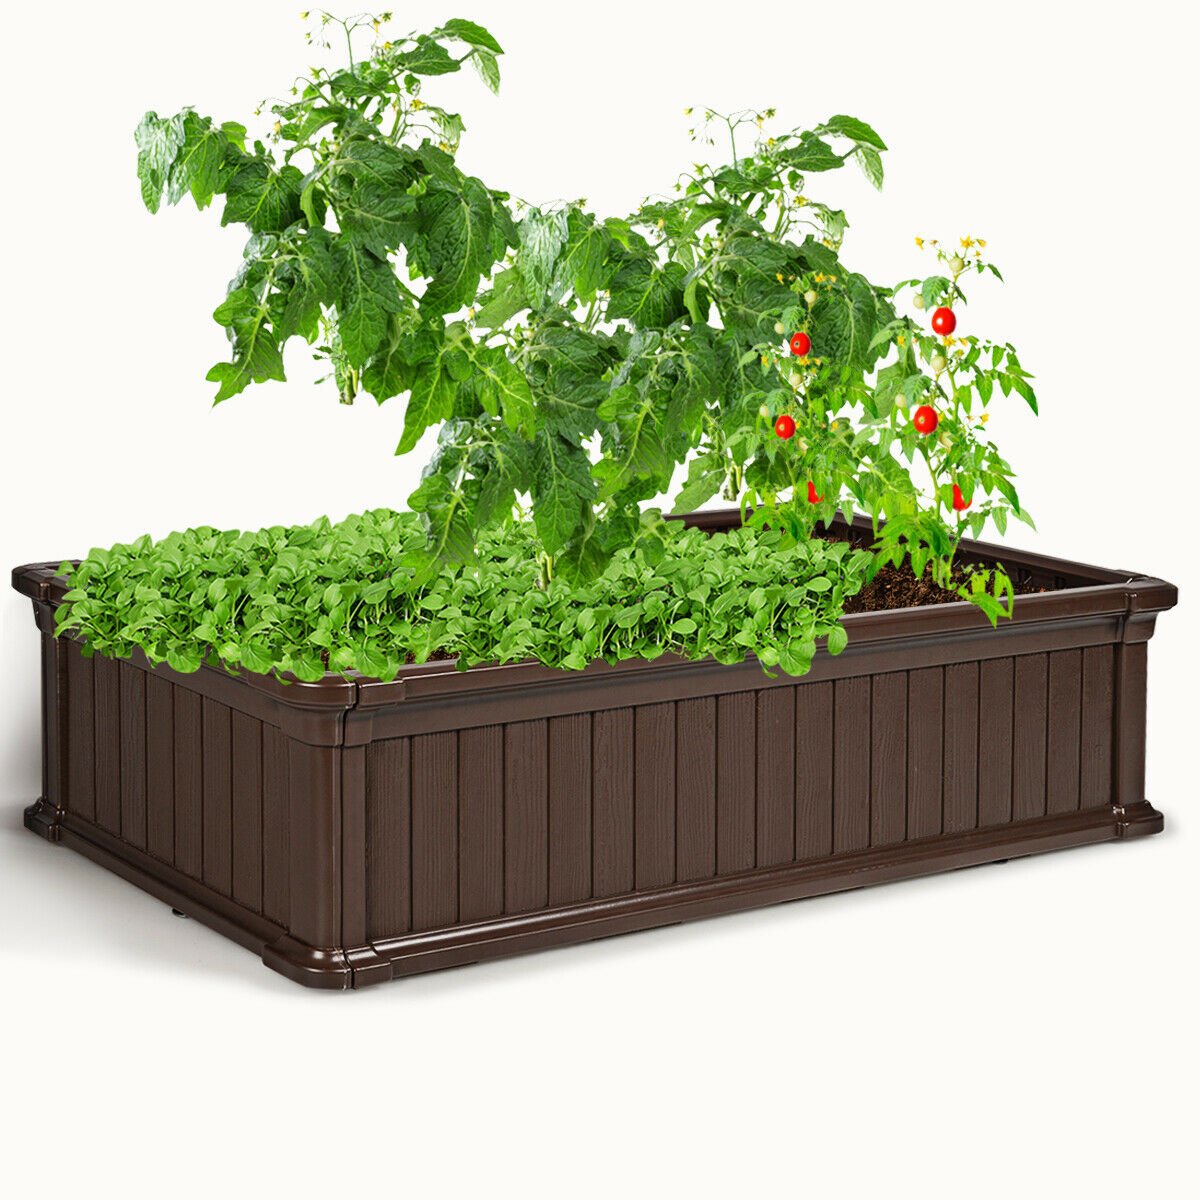 48''x24'' Raised Garden Bed Rectangle Plant Box Planter Flower Vegetable Brown/White - Brown